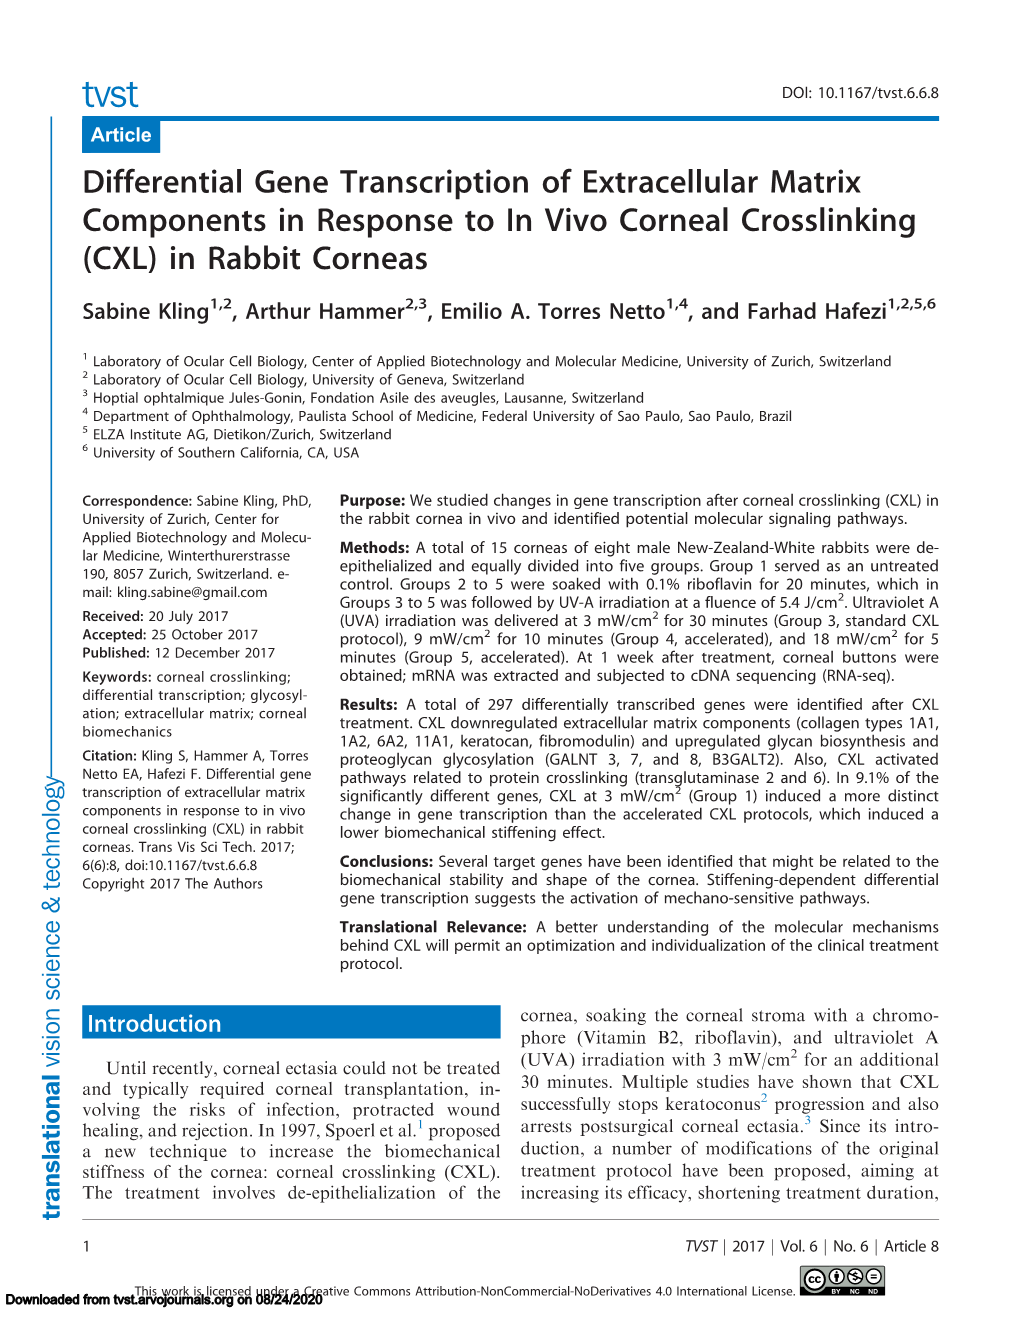 Differential Gene Transcription of Extracellular Matrix Components in Response to in Vivo Corneal Crosslinking (CXL) in Rabbit Corneas